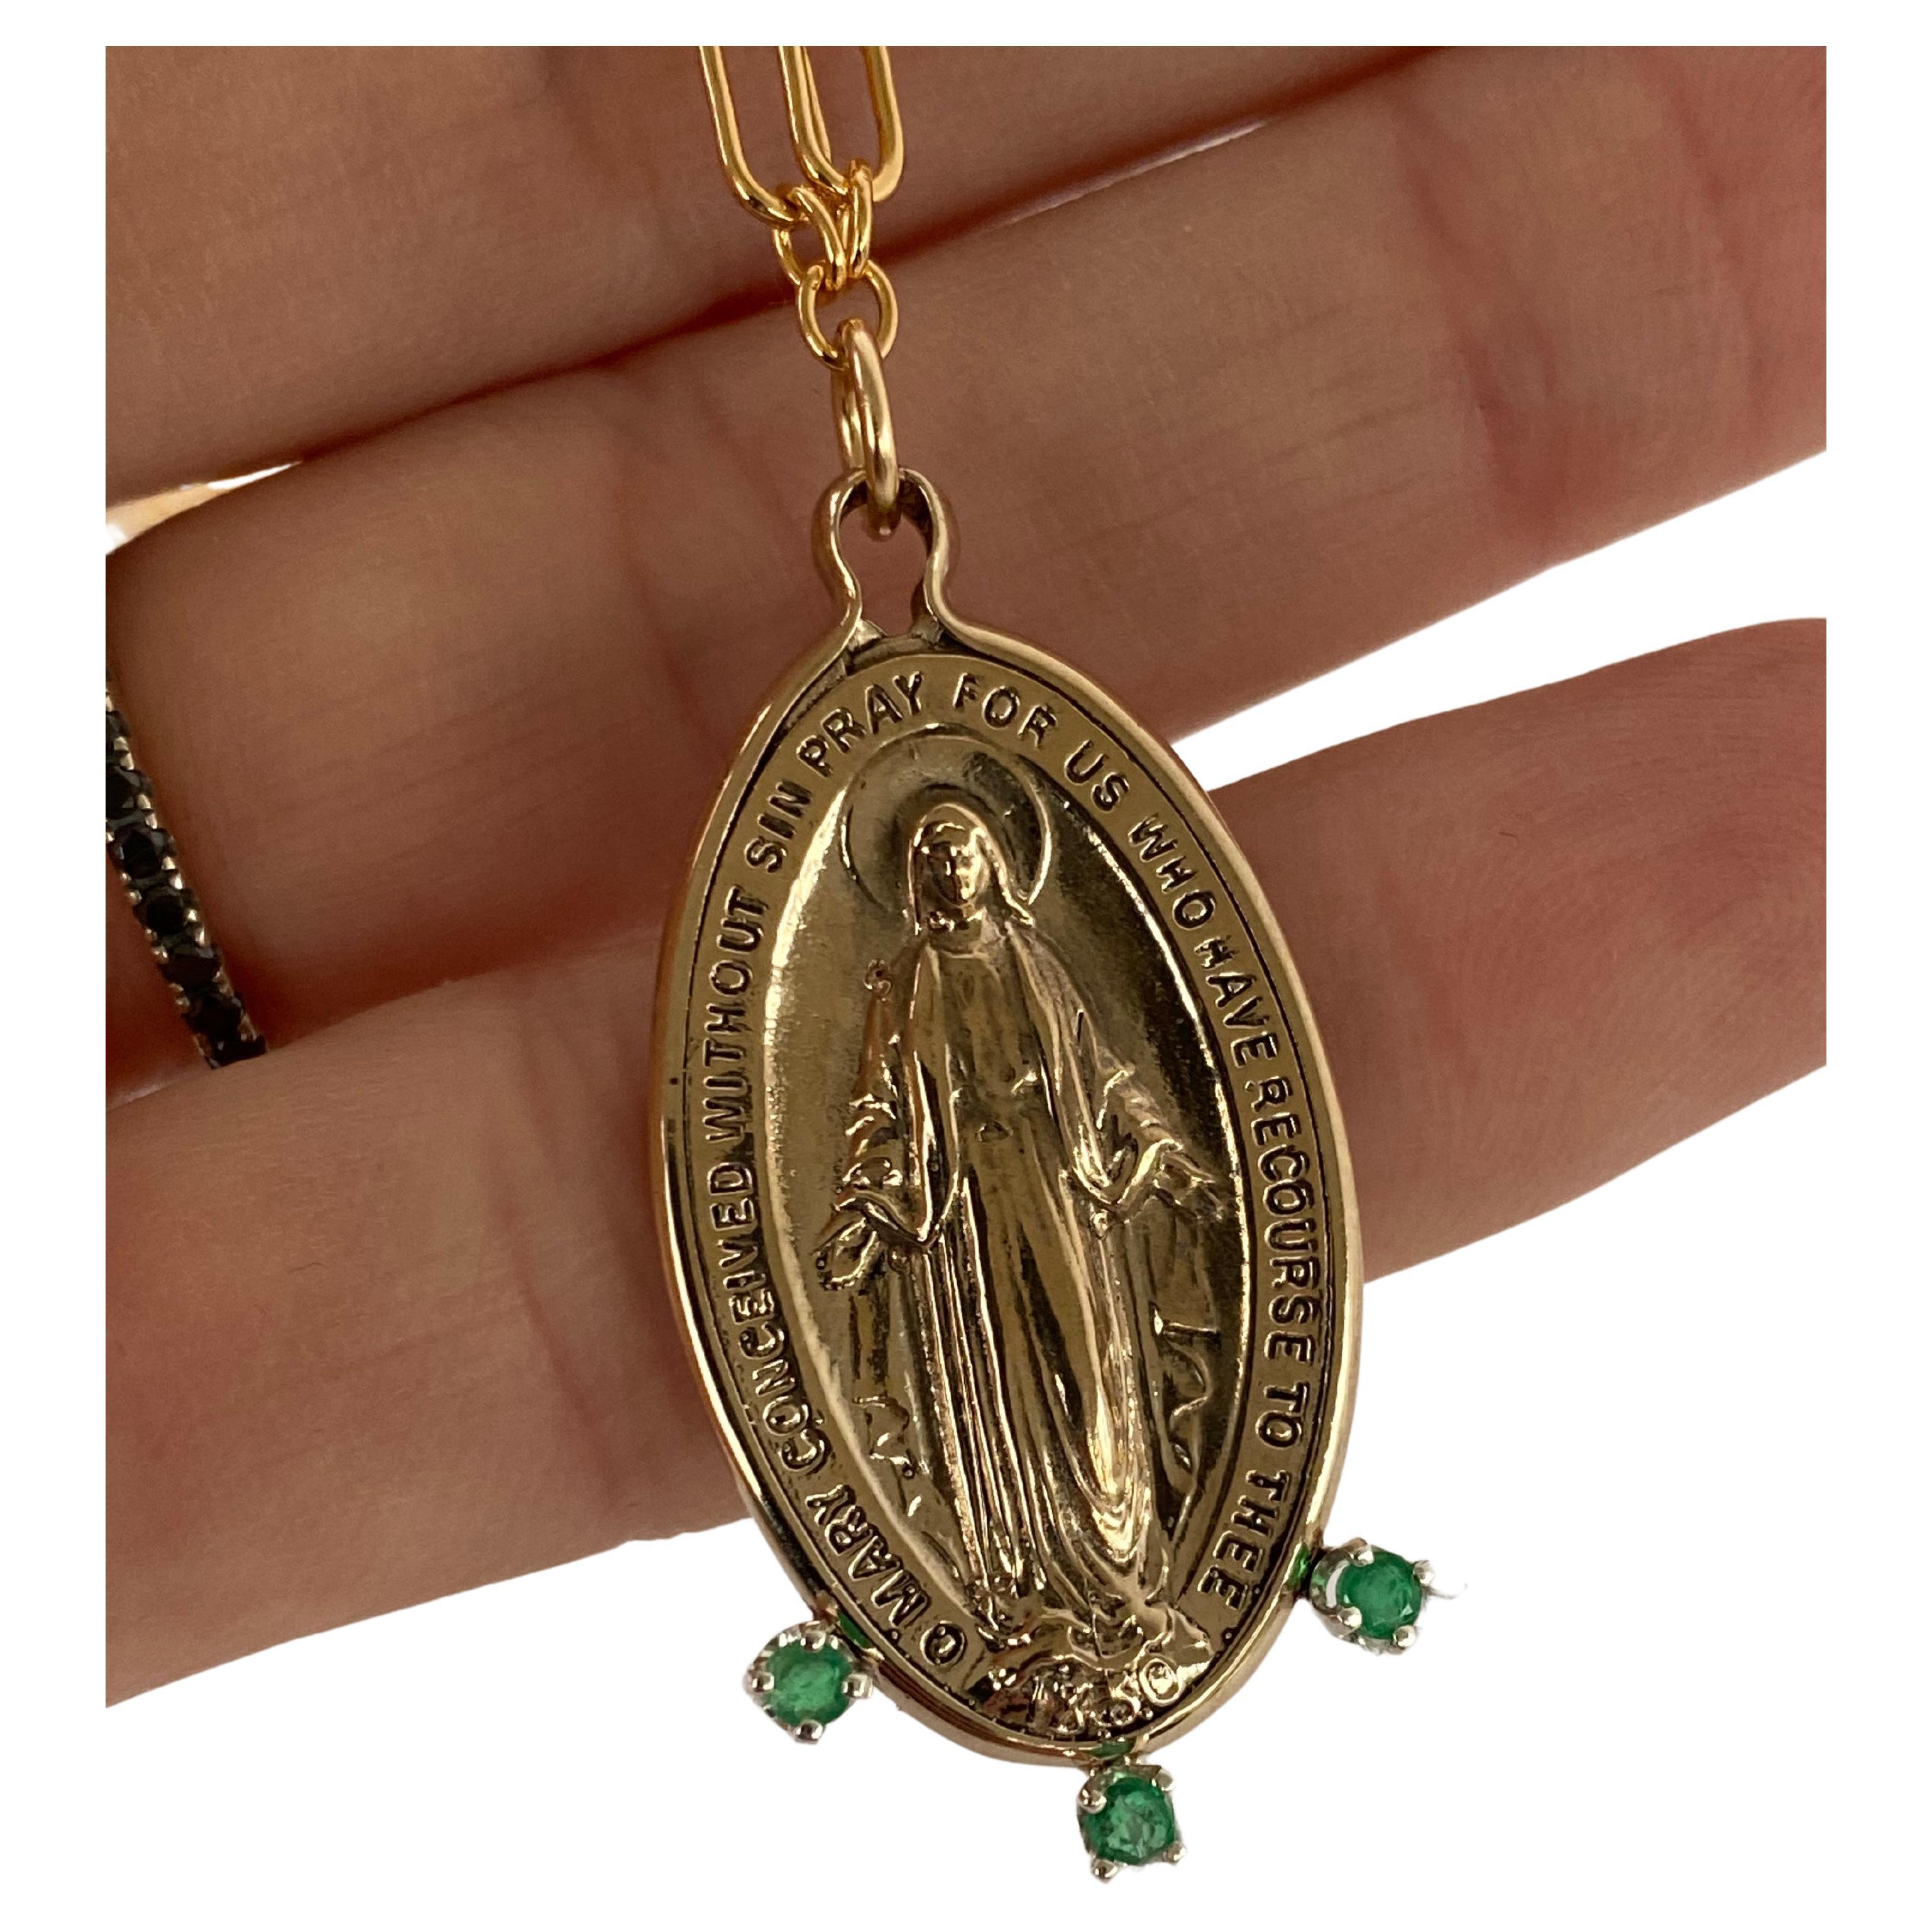 3 Stück Emerald Virgin Mary Medal Chunky Chain Halskette Bronze Gold gefüllt J DAUPHIN

Exklusives Stück eines ovalen Anhängers der Wundertätigen Medaille namens  